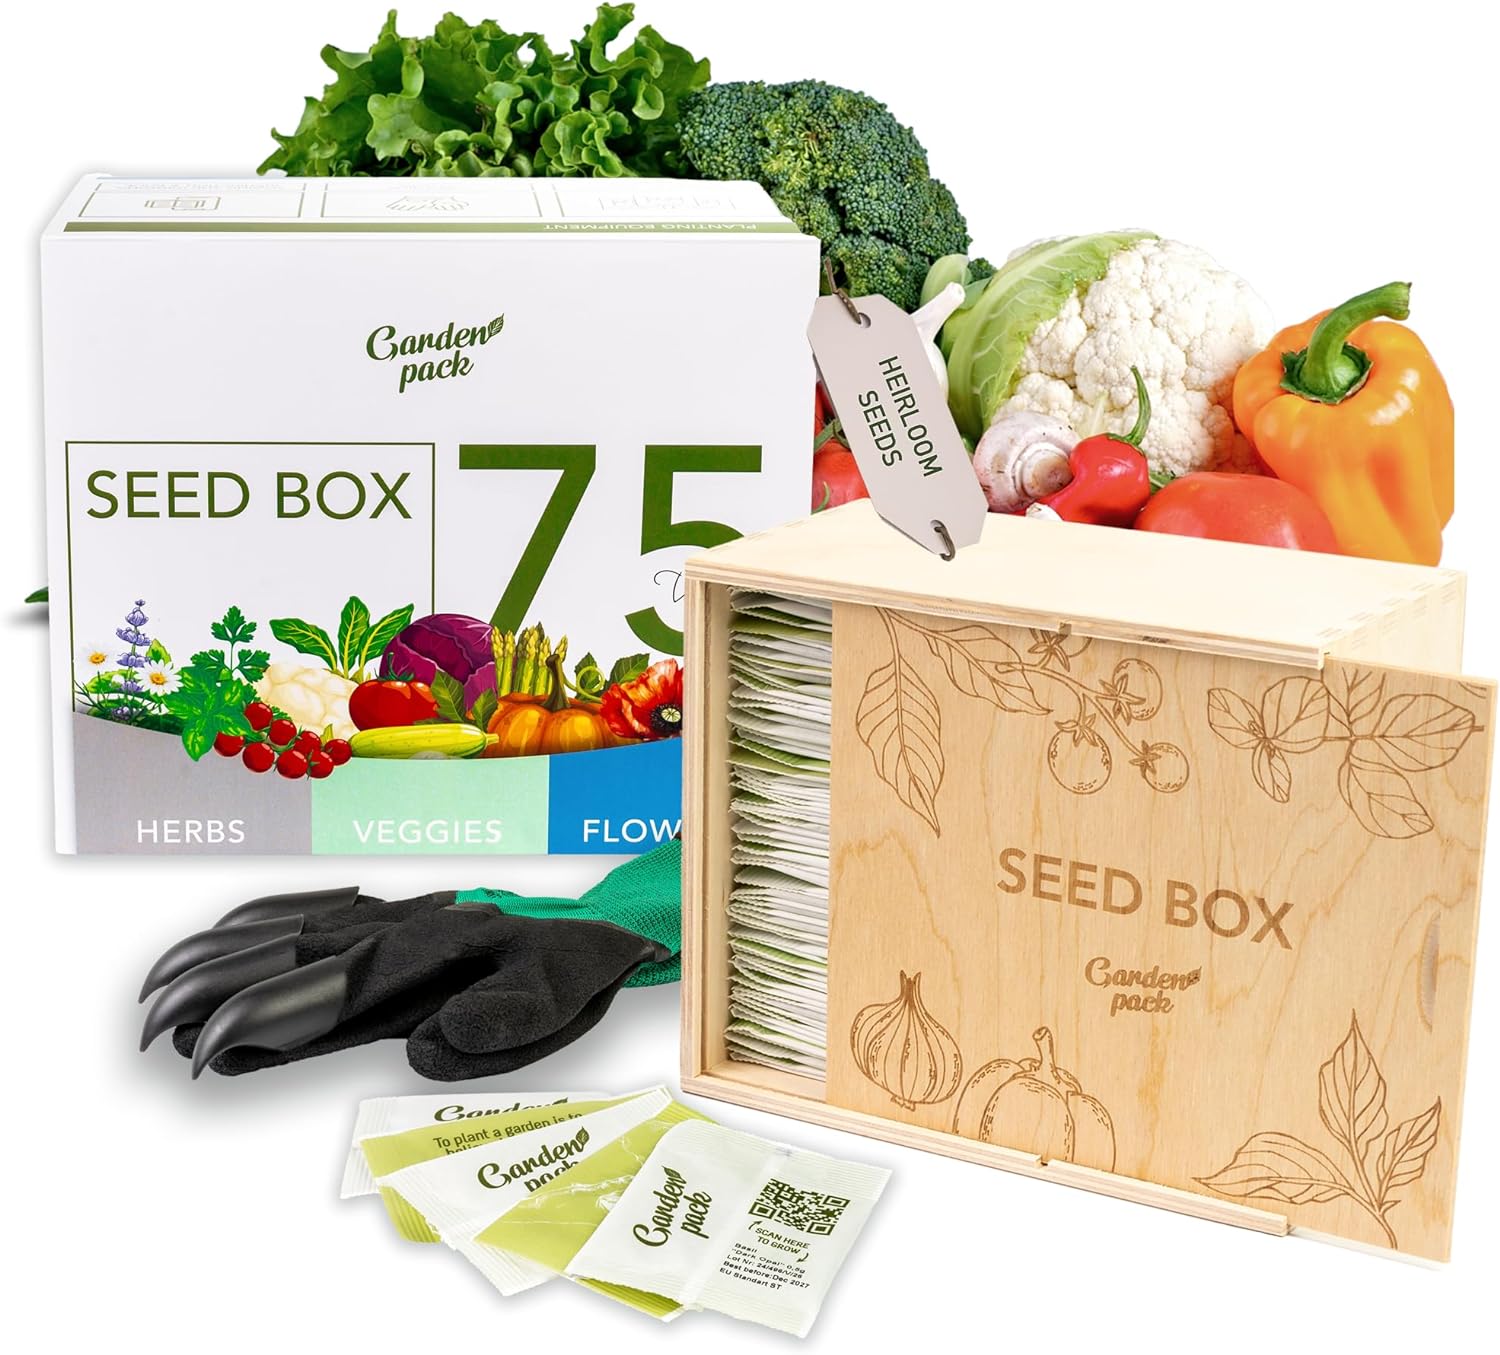 Grow Your Own Seed Box by Garden Pack - 75 Varieties of Flower, Herb, Vegetable Seeds